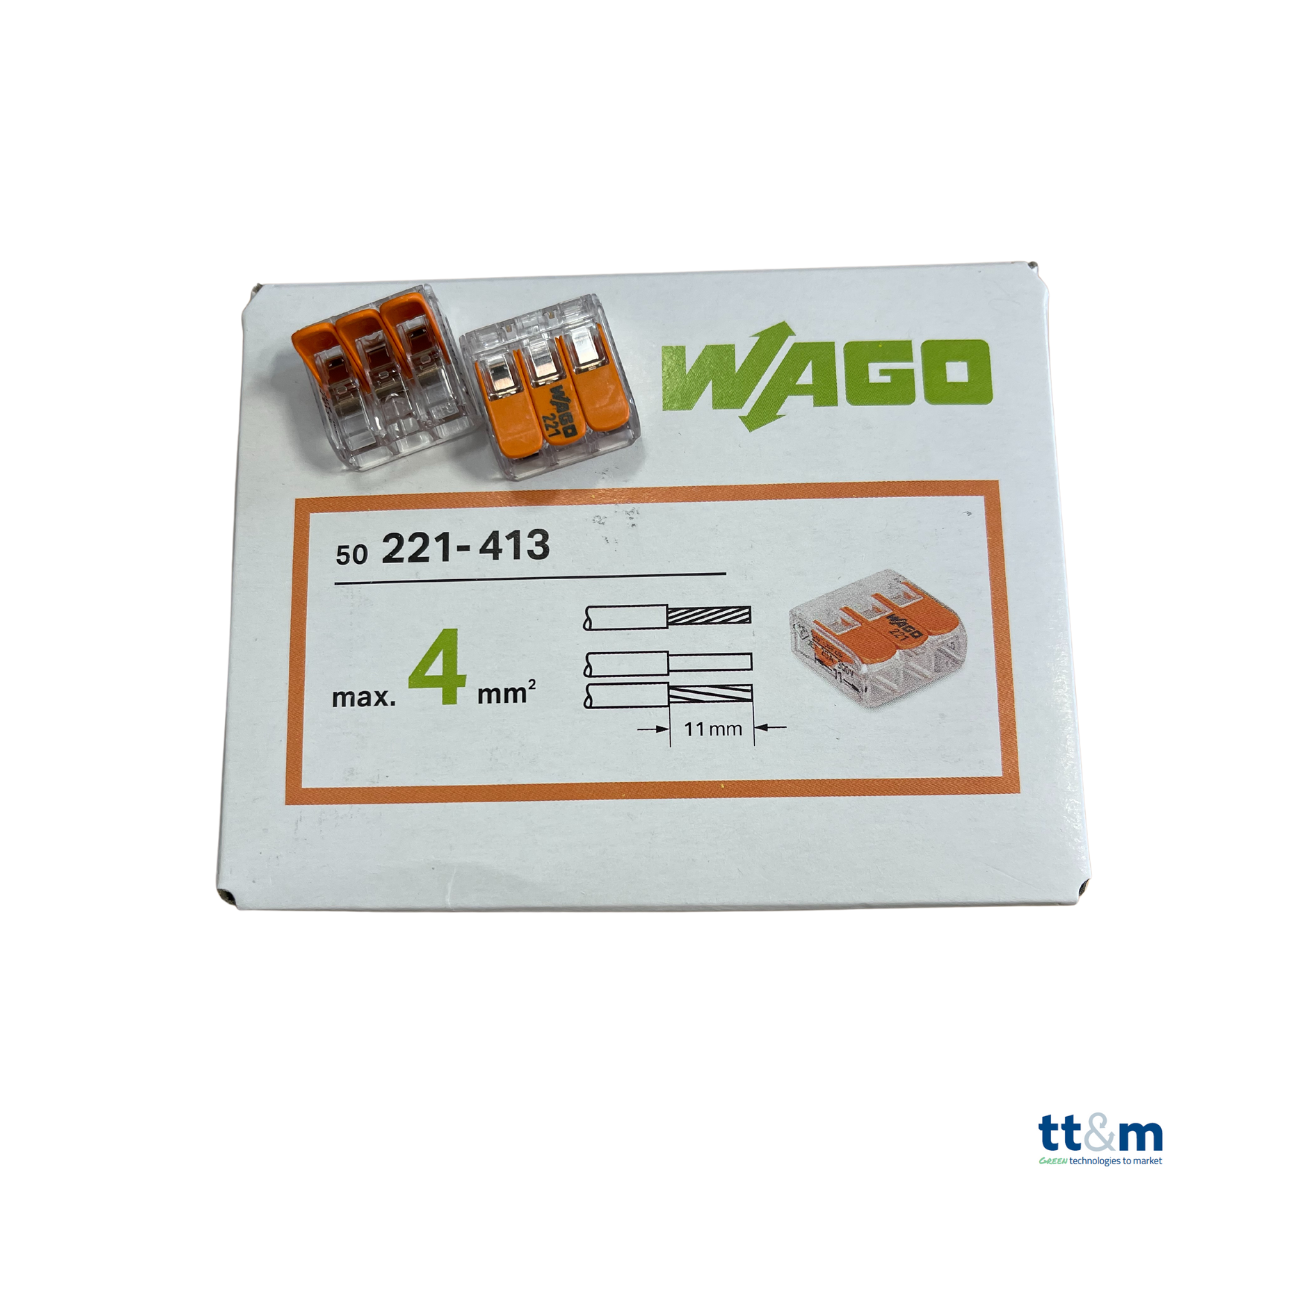 WAGO COMPACT-Verbindungsklemme, 3-polig, max. 4 mm², 221-413 (50 Stk.)